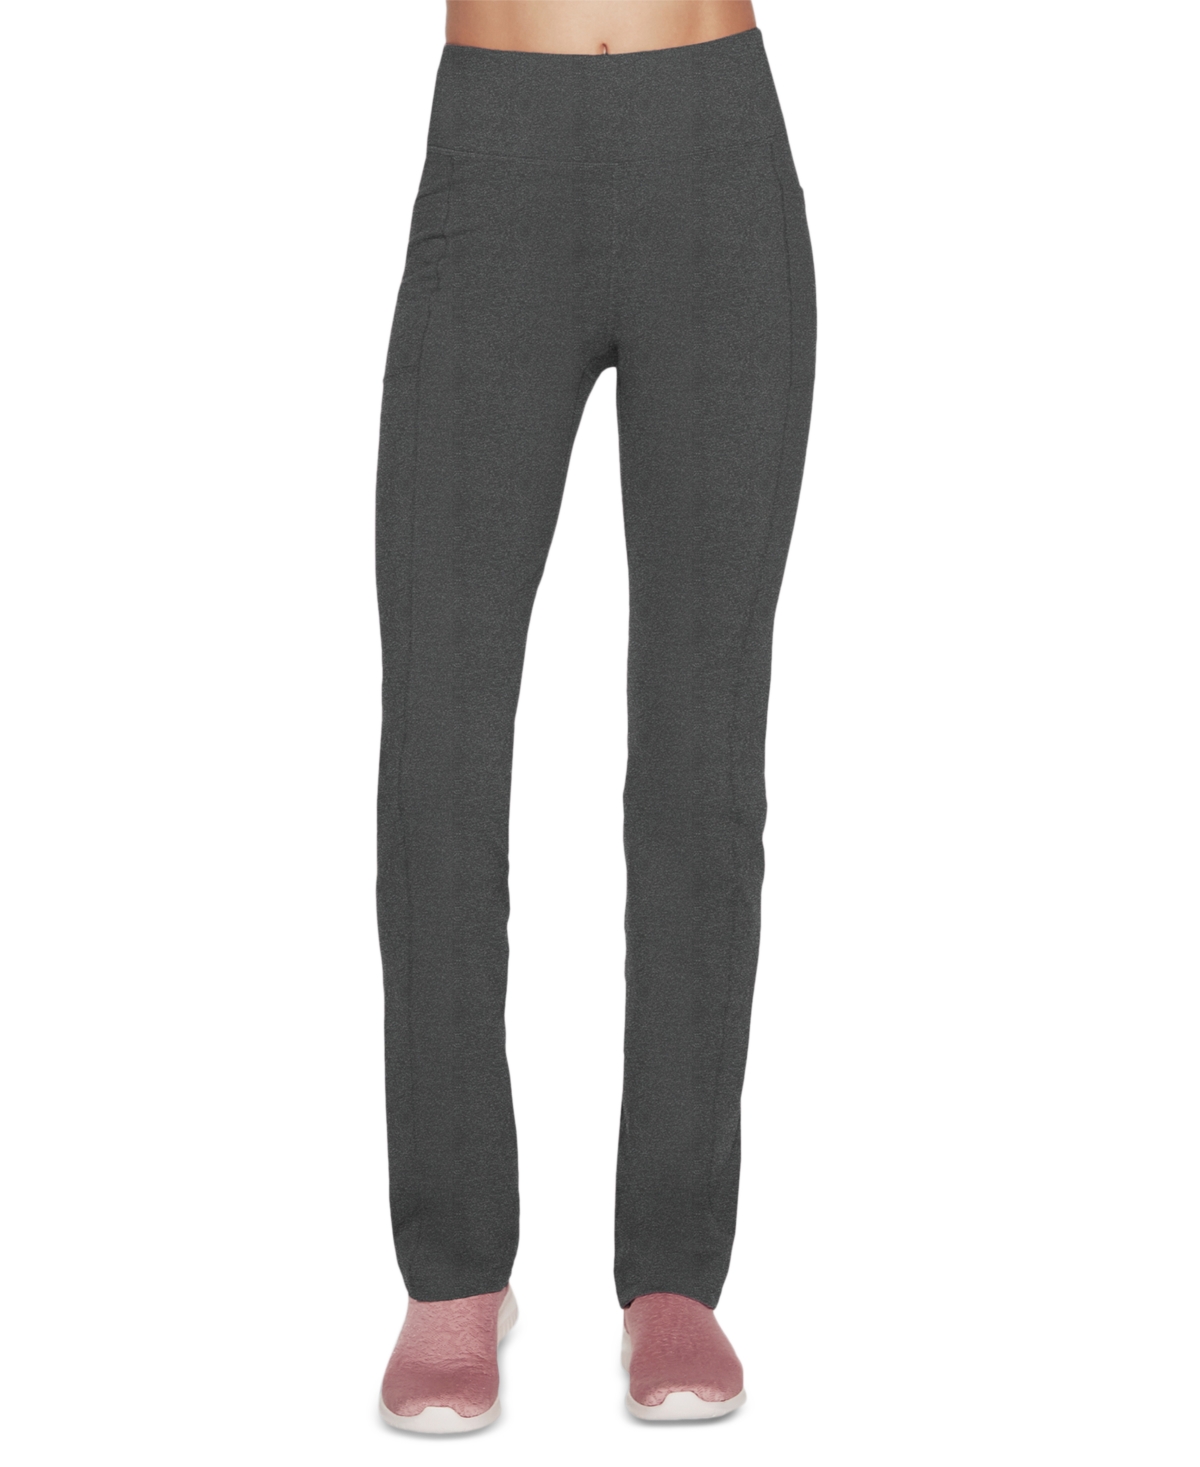 Skechers Women's Gowalk High Waisted Legging Pants, Charcoal Grey